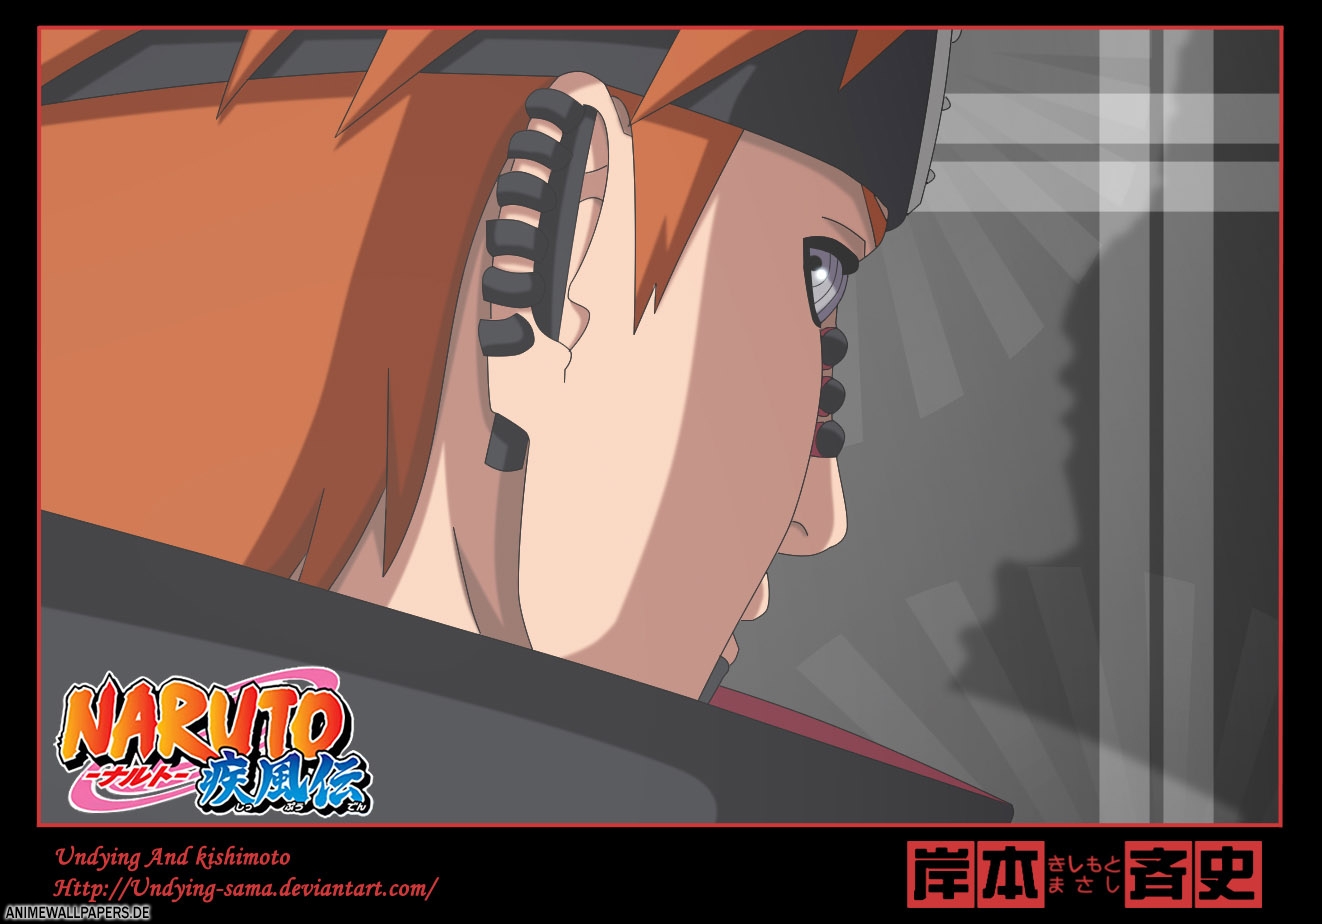 Naruto - Pain.jpg